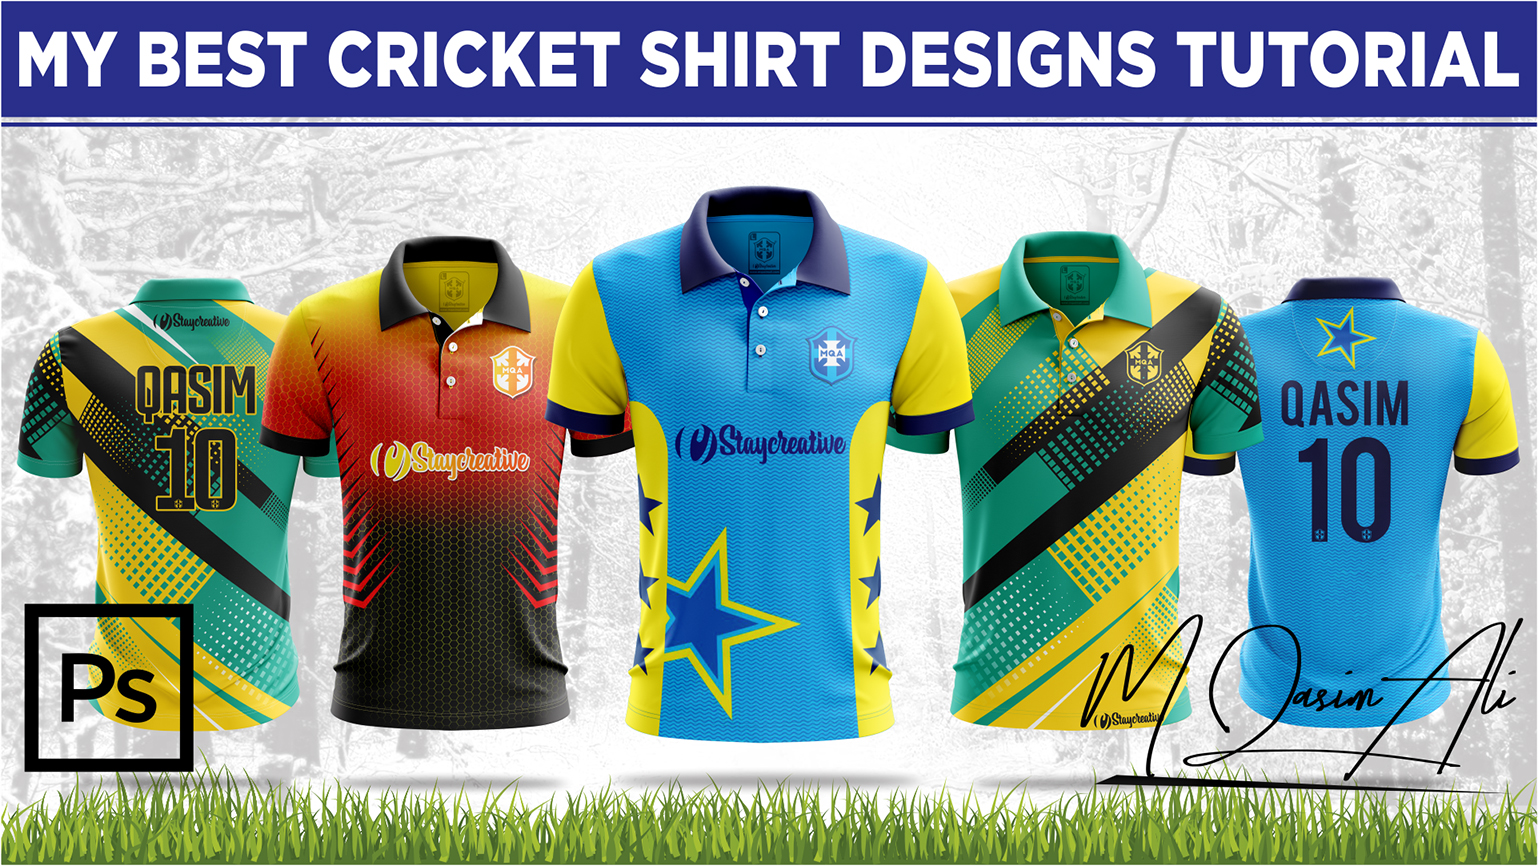 Download My Best Cricket Shirt Design Tutorial In Photoshop Cc 2020 By M Qasim Ali M Qasim Ali Sports Templates For Photoshop